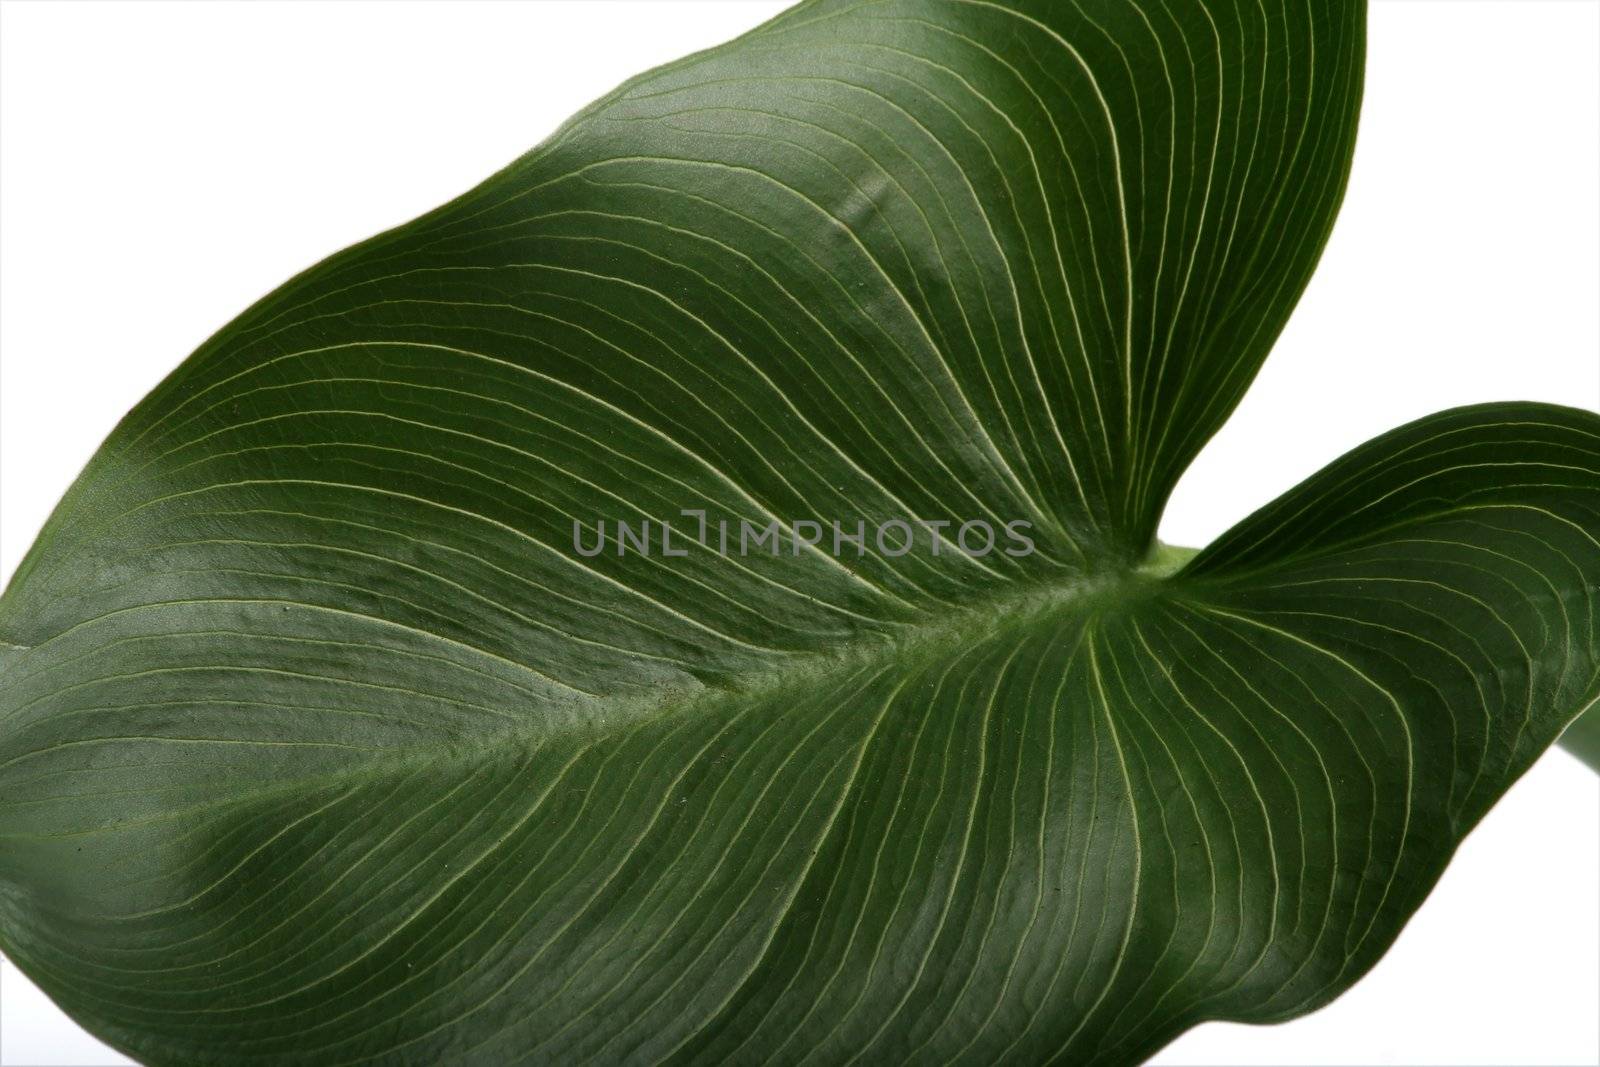 Green Lily Leaf by fouroaks